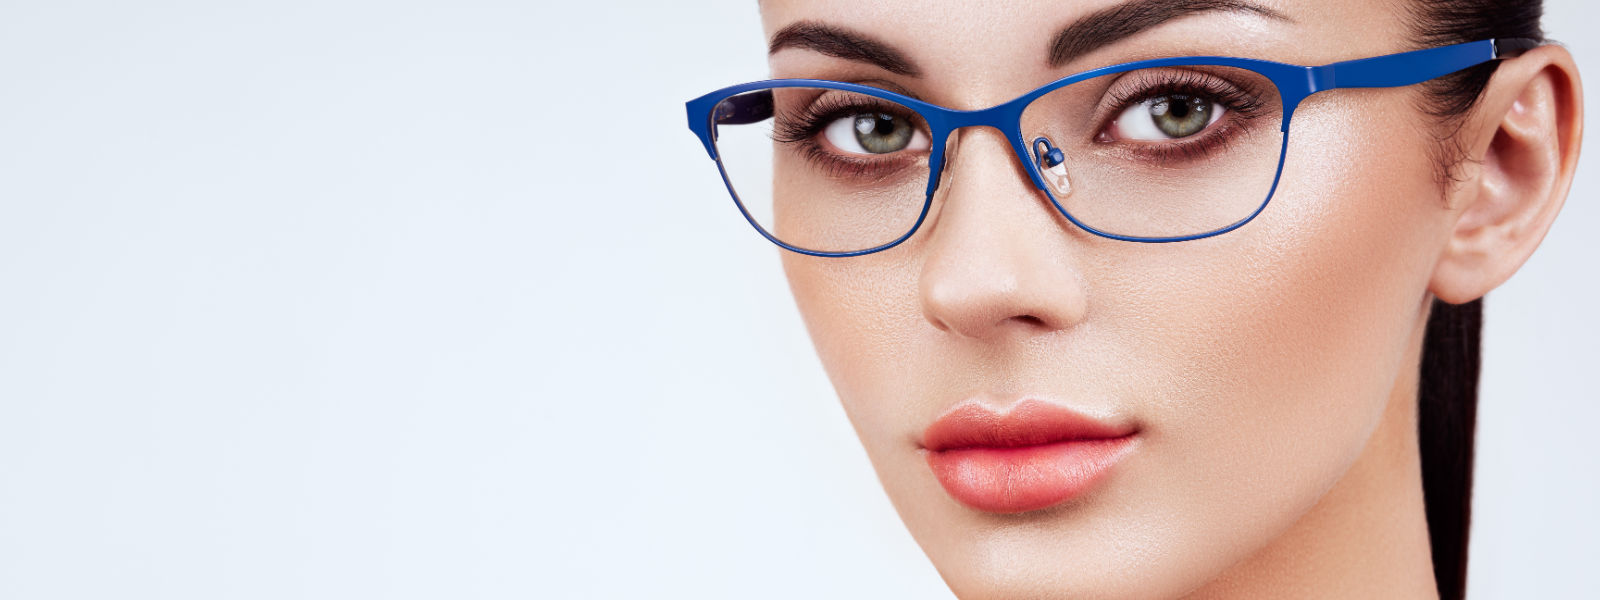 NORDOPTIKA OÜ - Optics, eyeglass repair, Eyewear Frames, goggle lenses, sunglasses, eyewear maintenance, contact lenses, ...